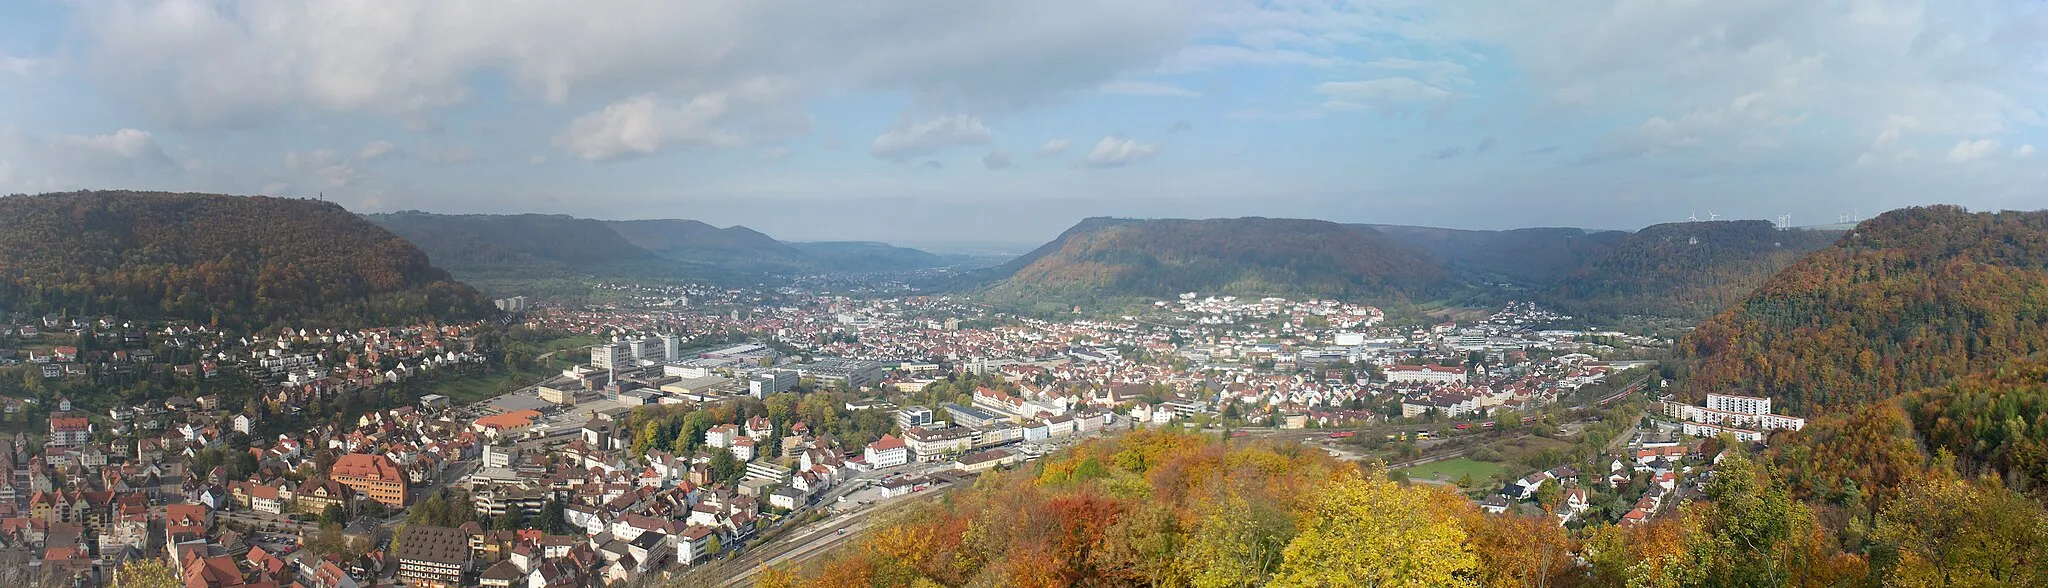 Photo showing: Panorama of Geislingen an der Steige, Germany